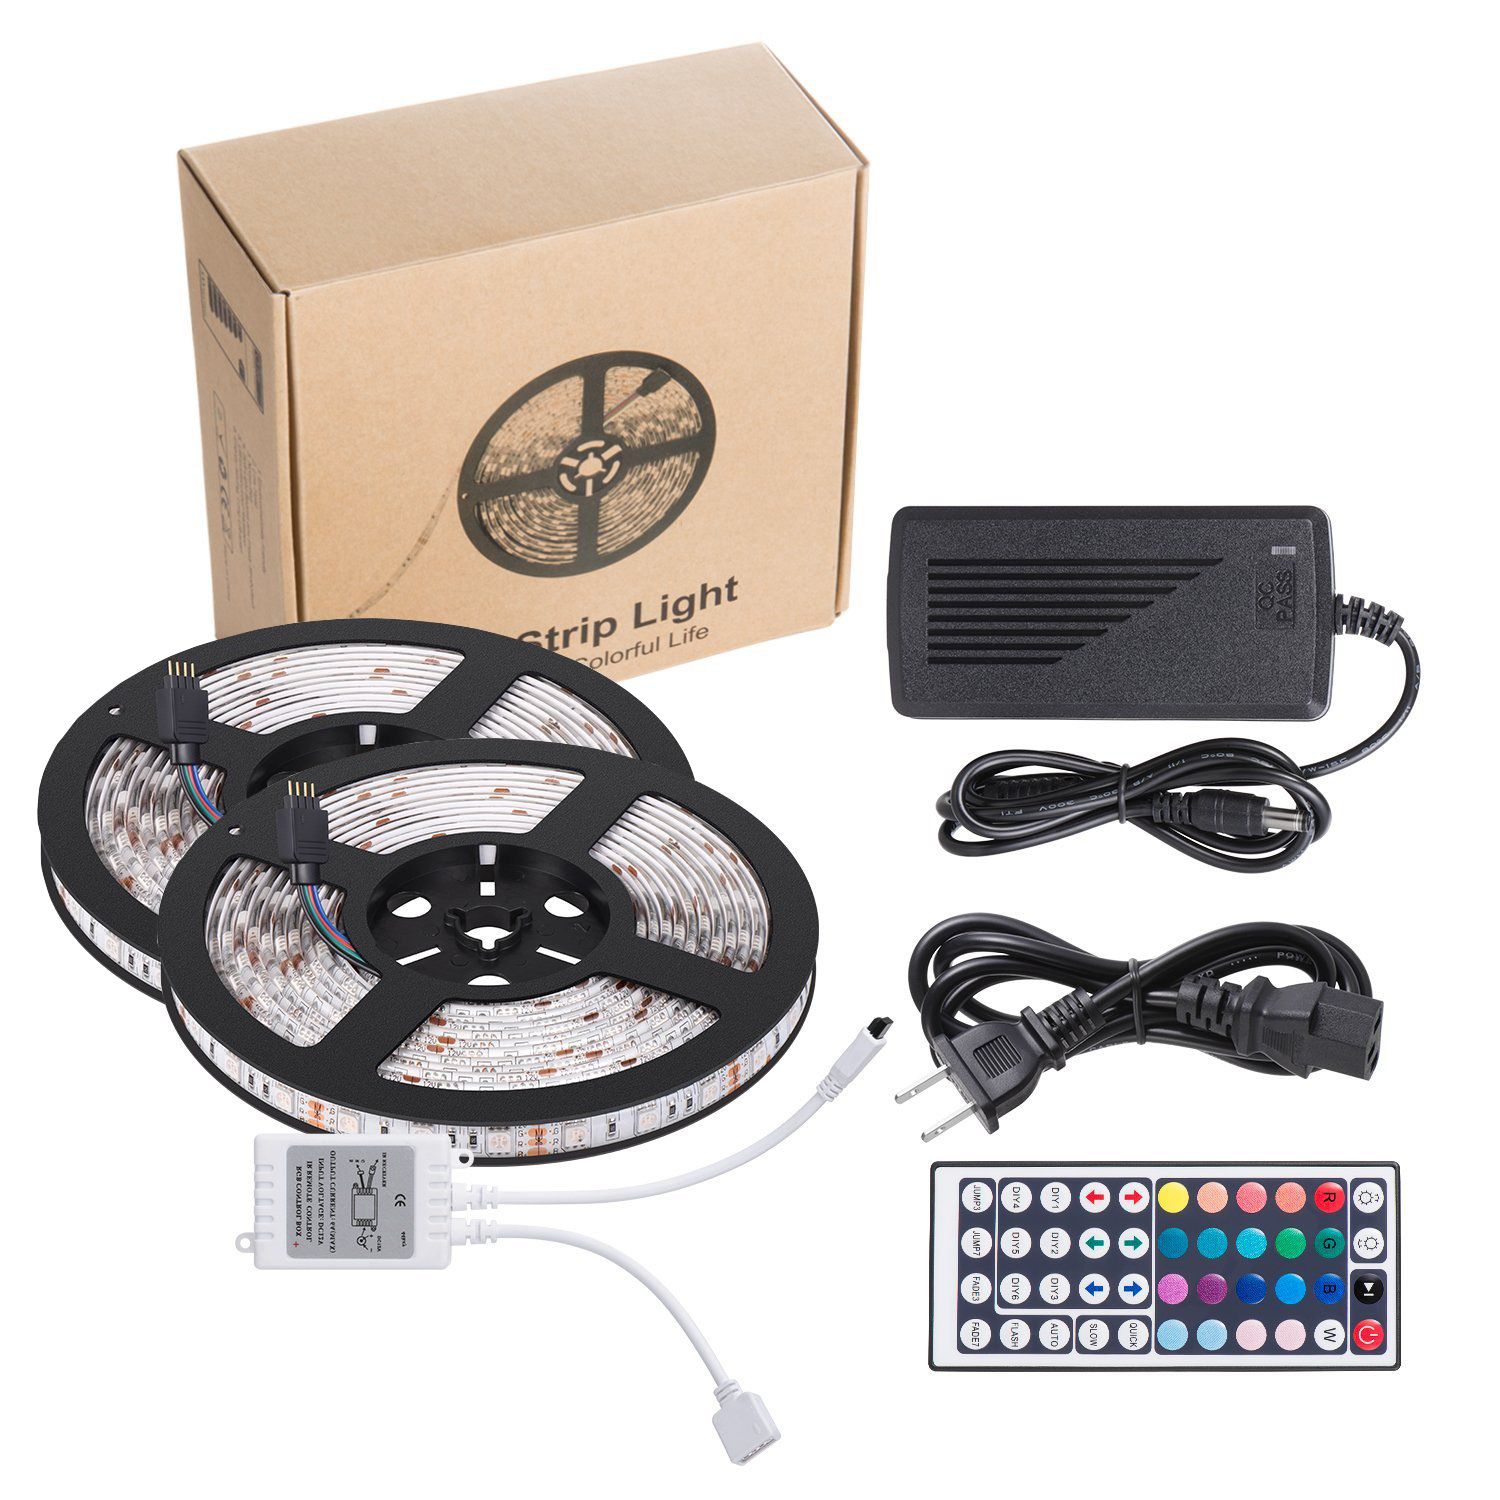 Buy 5050 LED RGB light x2 strips online through Amazon (includes Prime)